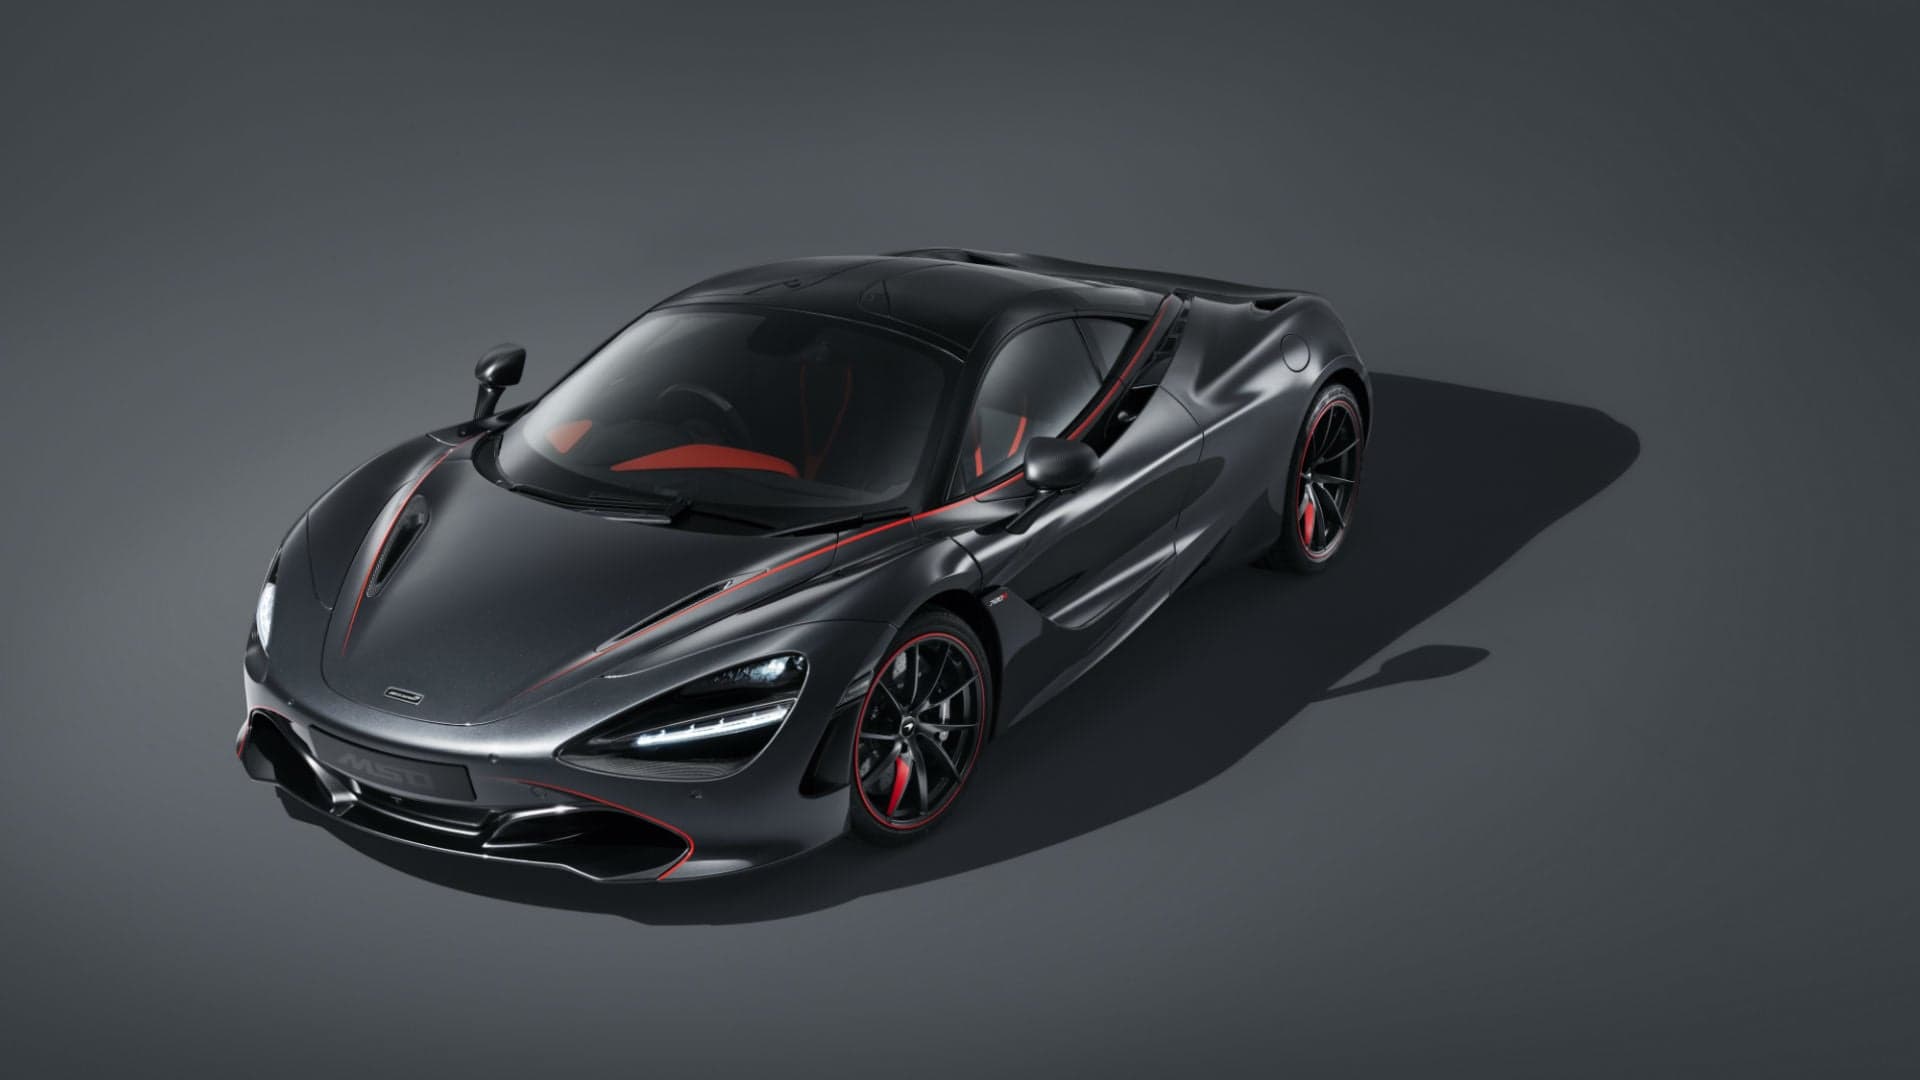 McLaren 720S Stealth Theme is MSO’s Latest Elite Supercar Creation